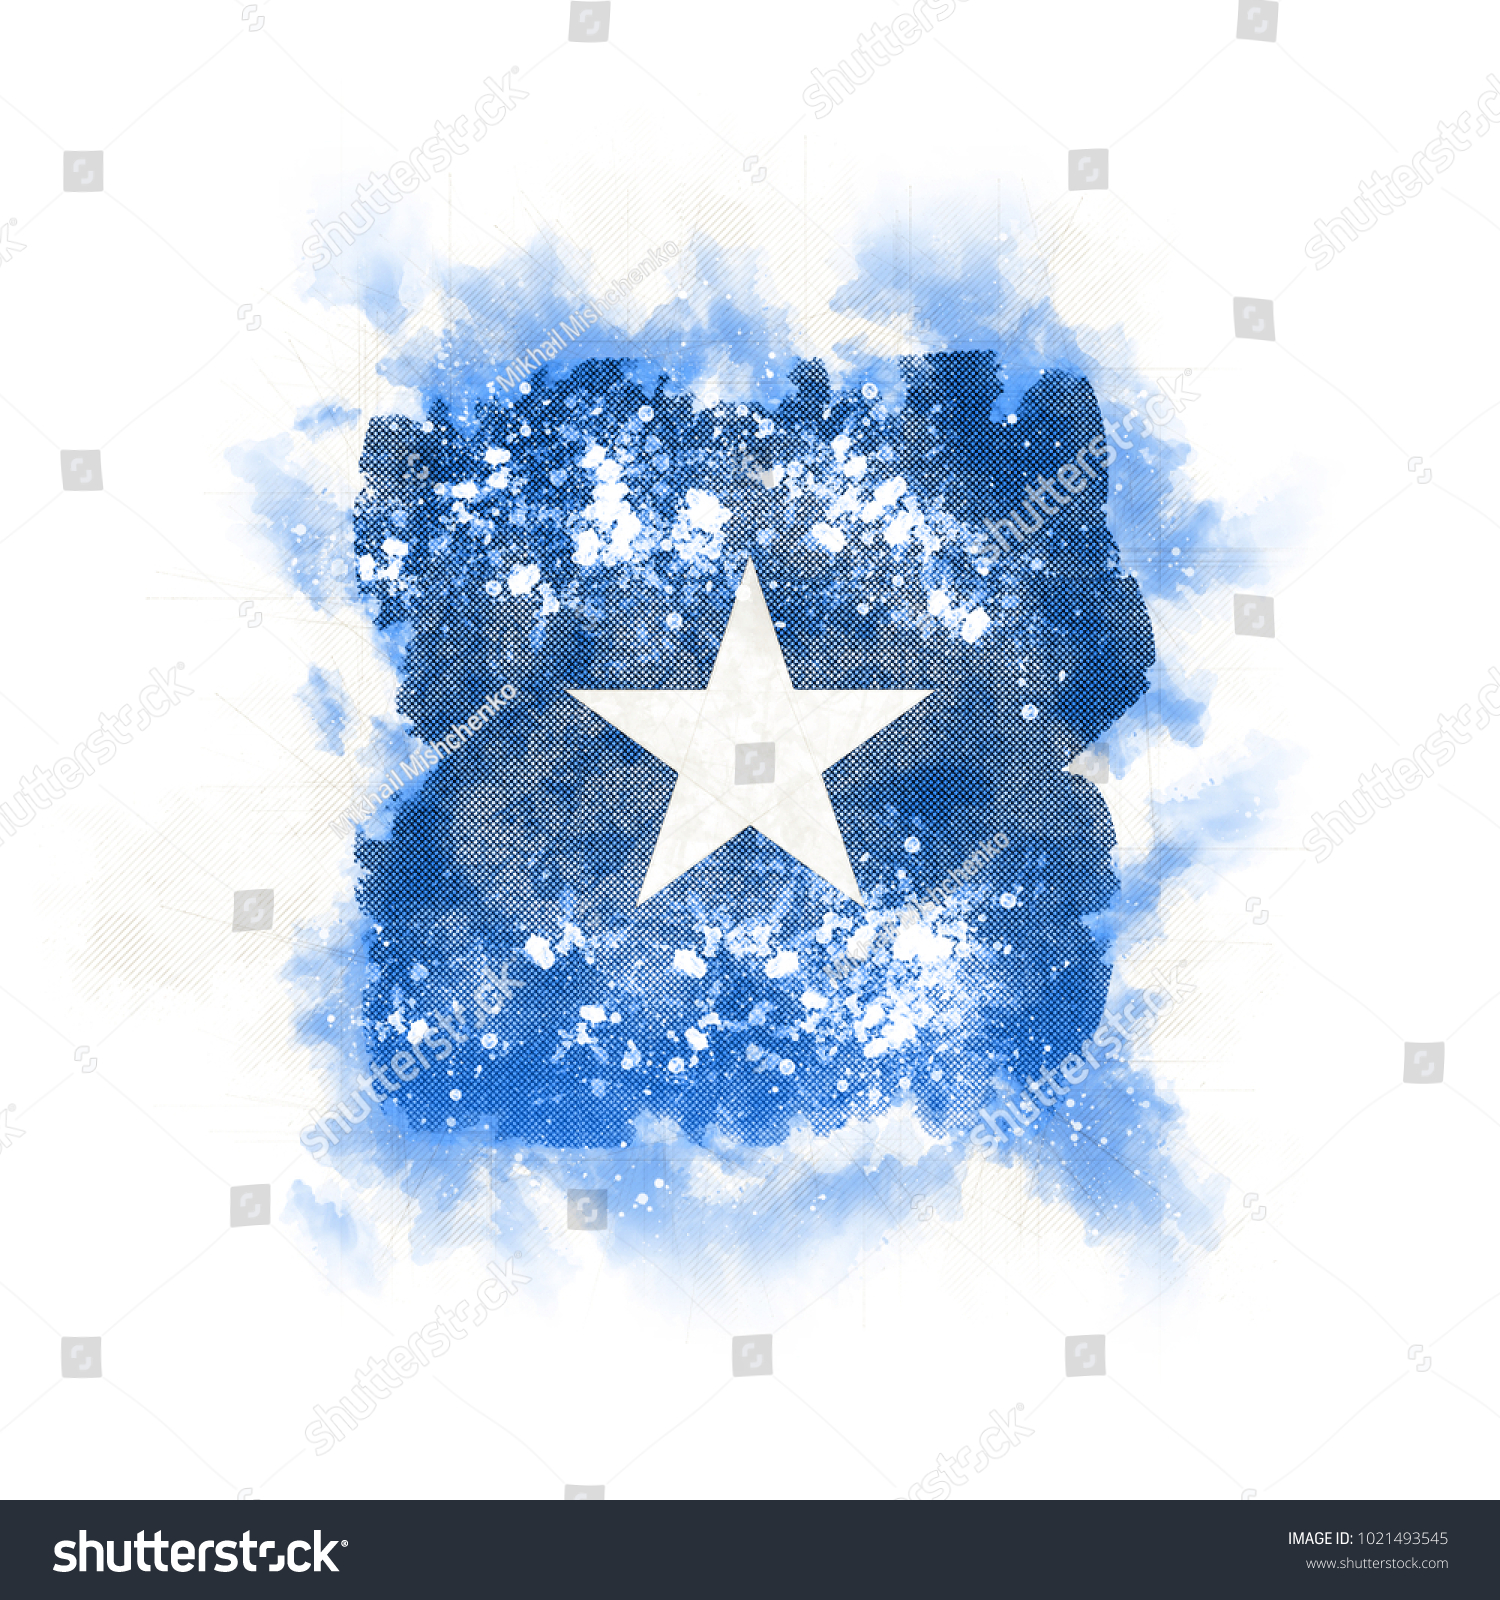 Square Grunge Flag Somalia 3d Illustration Stock Illustration ...